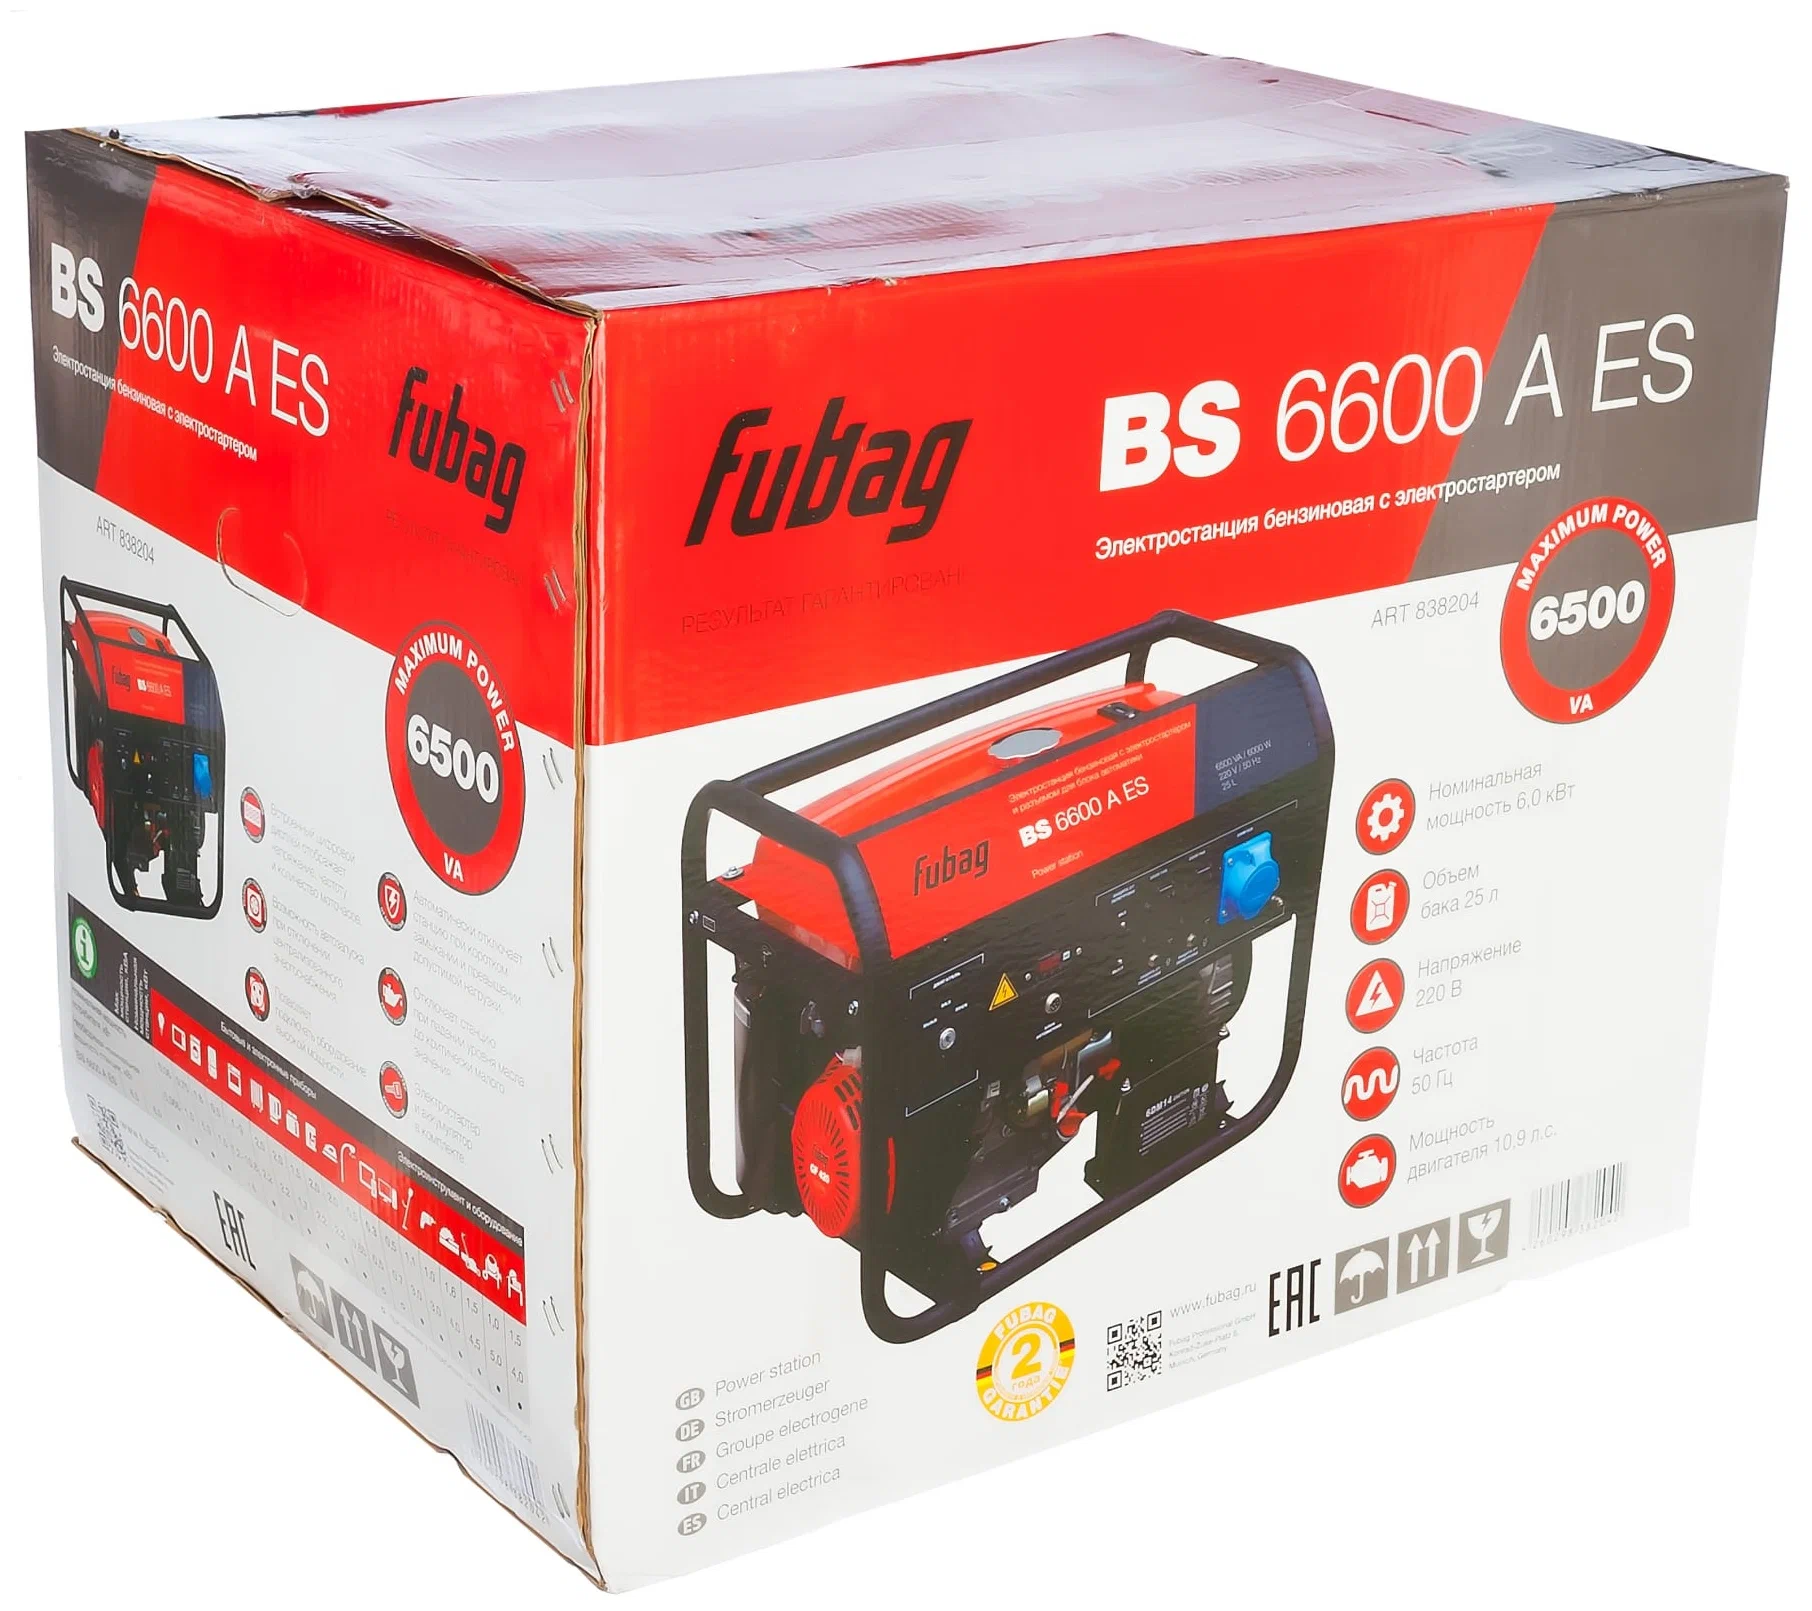 Fubag BS 6600 A ES, (6500 Вт) - число розеток 220 В: 3